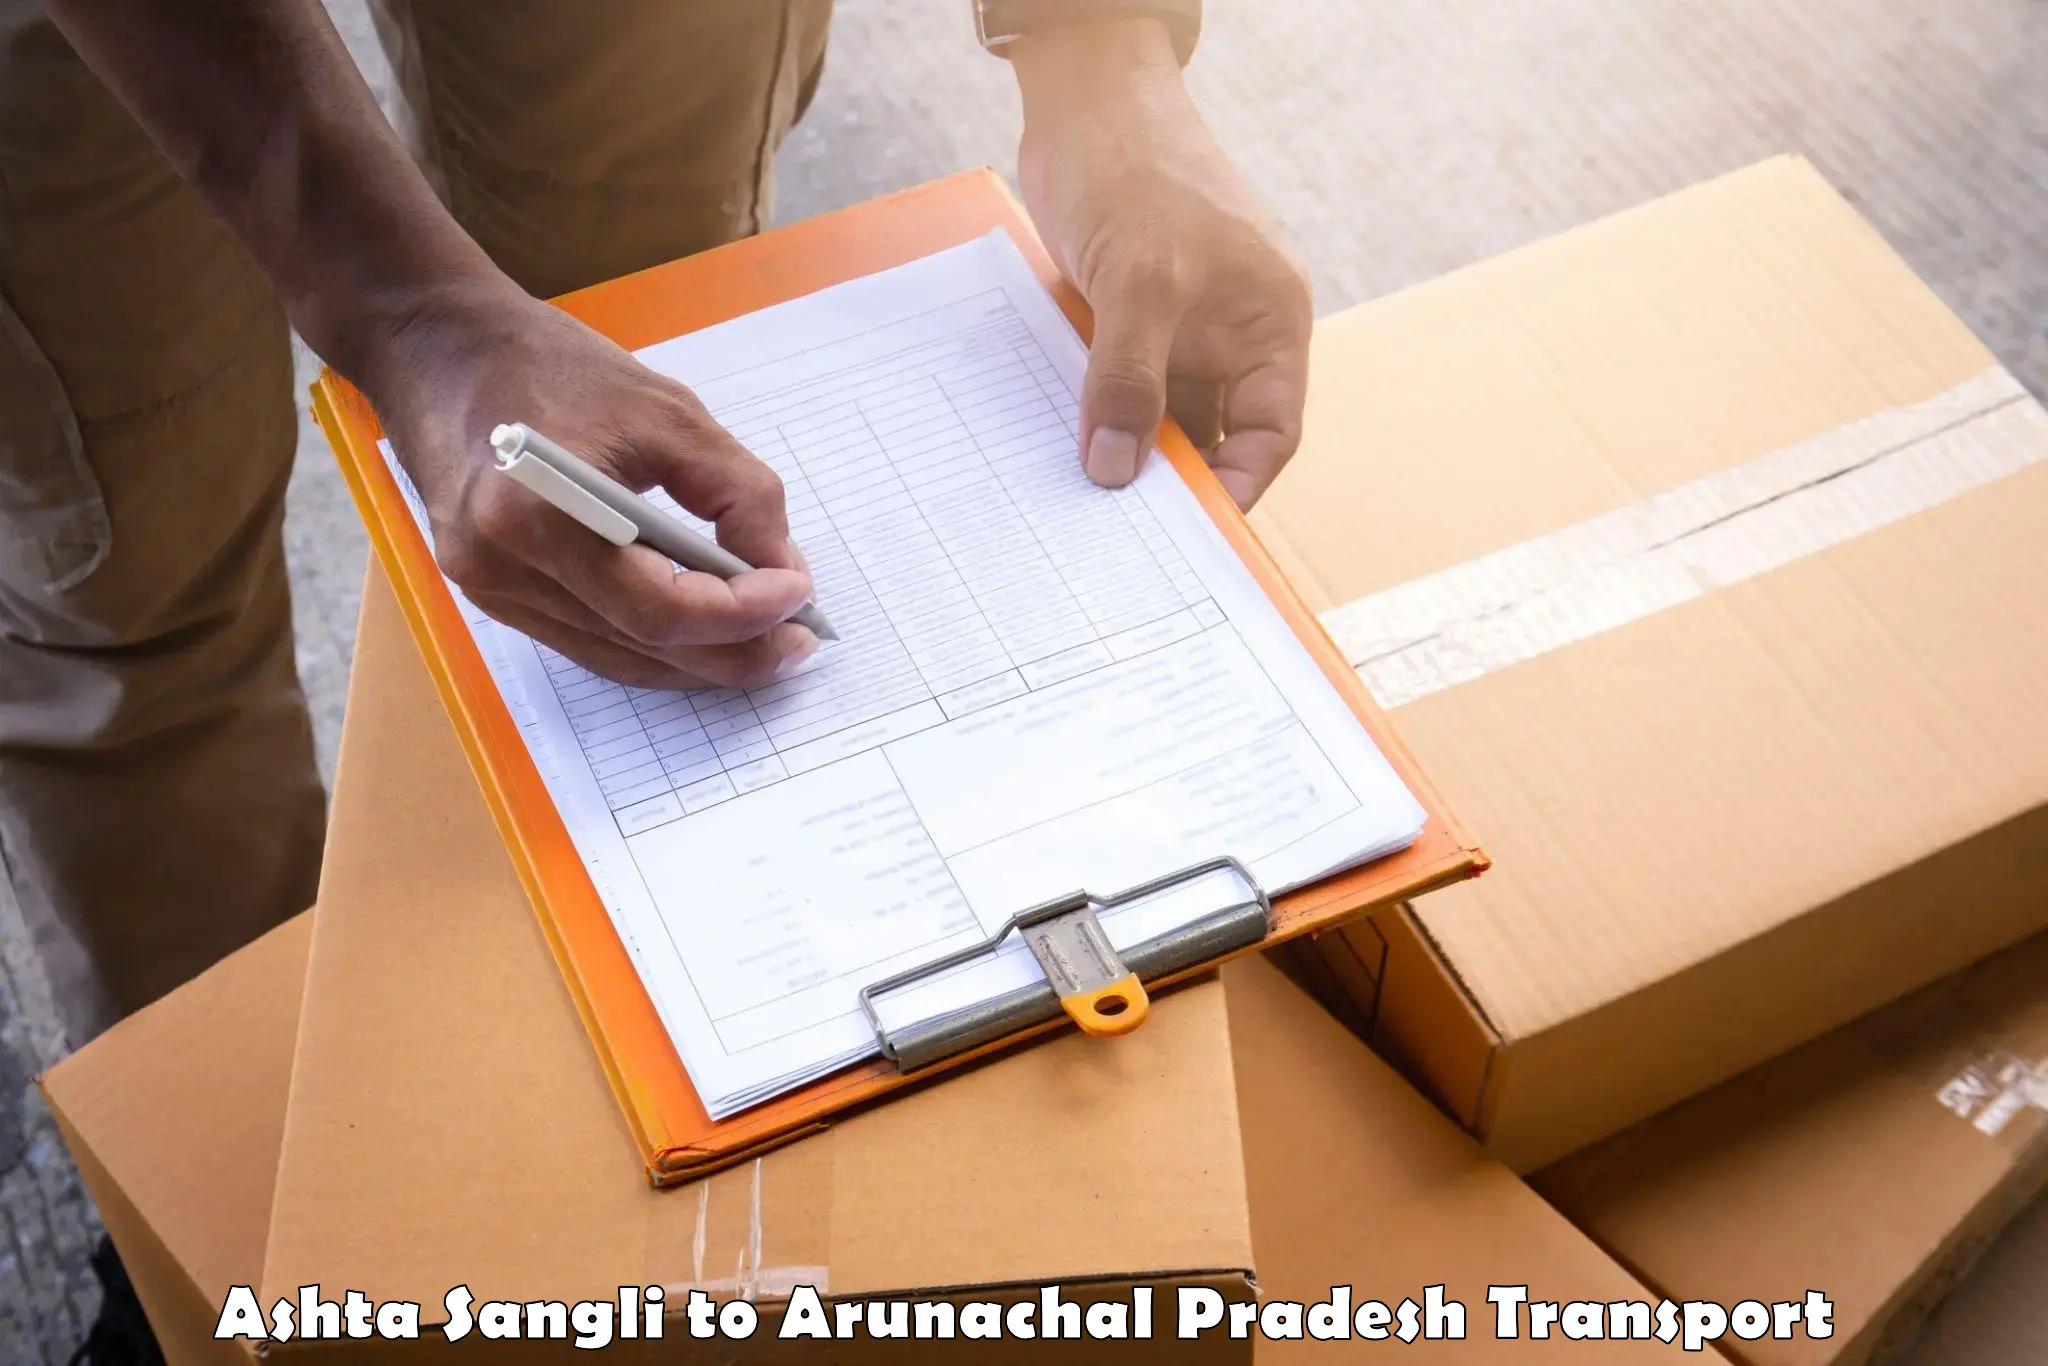 Truck transport companies in India Ashta Sangli to Yingkiong